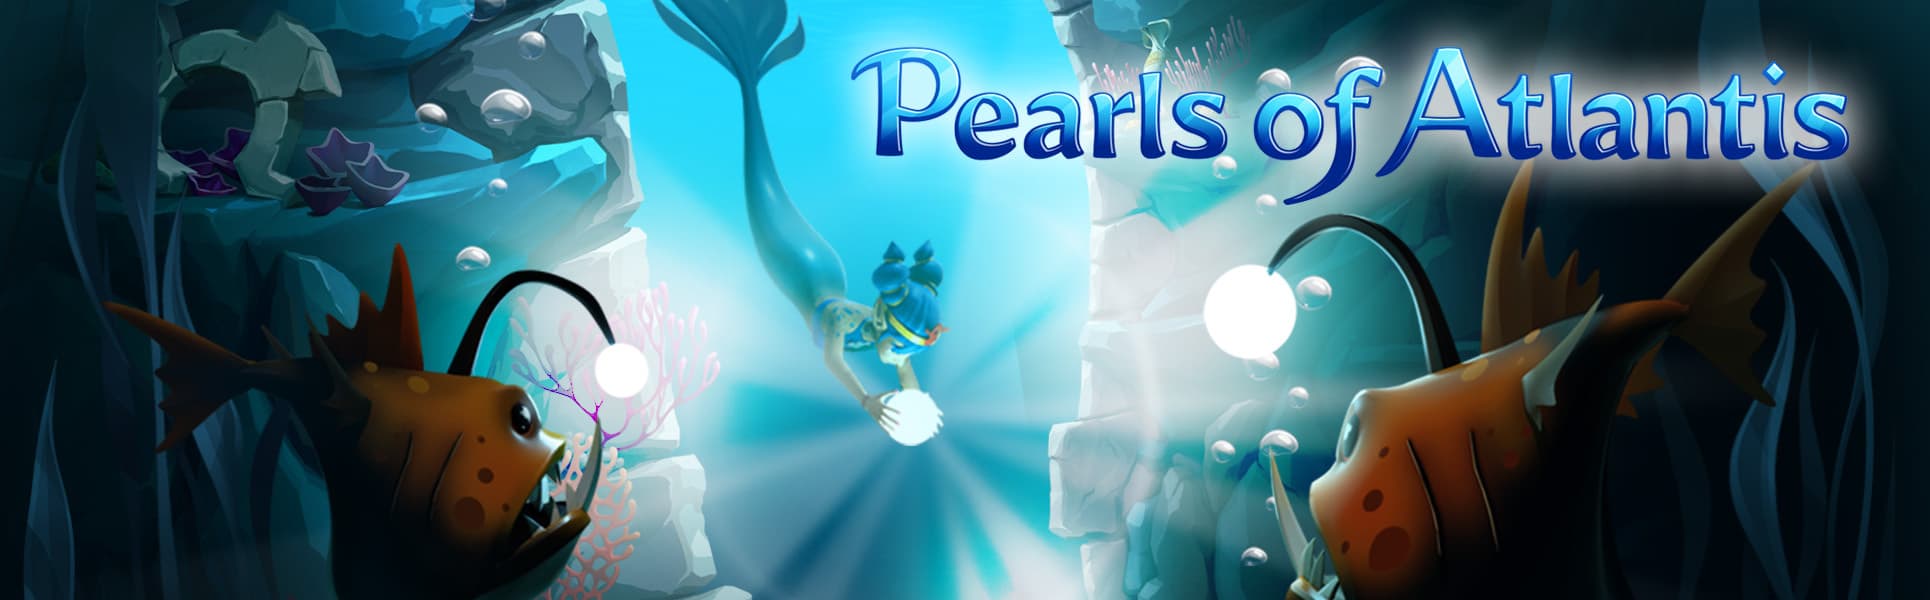 LGL_Pearls-of-Atlantis_Bottomless-Trench2